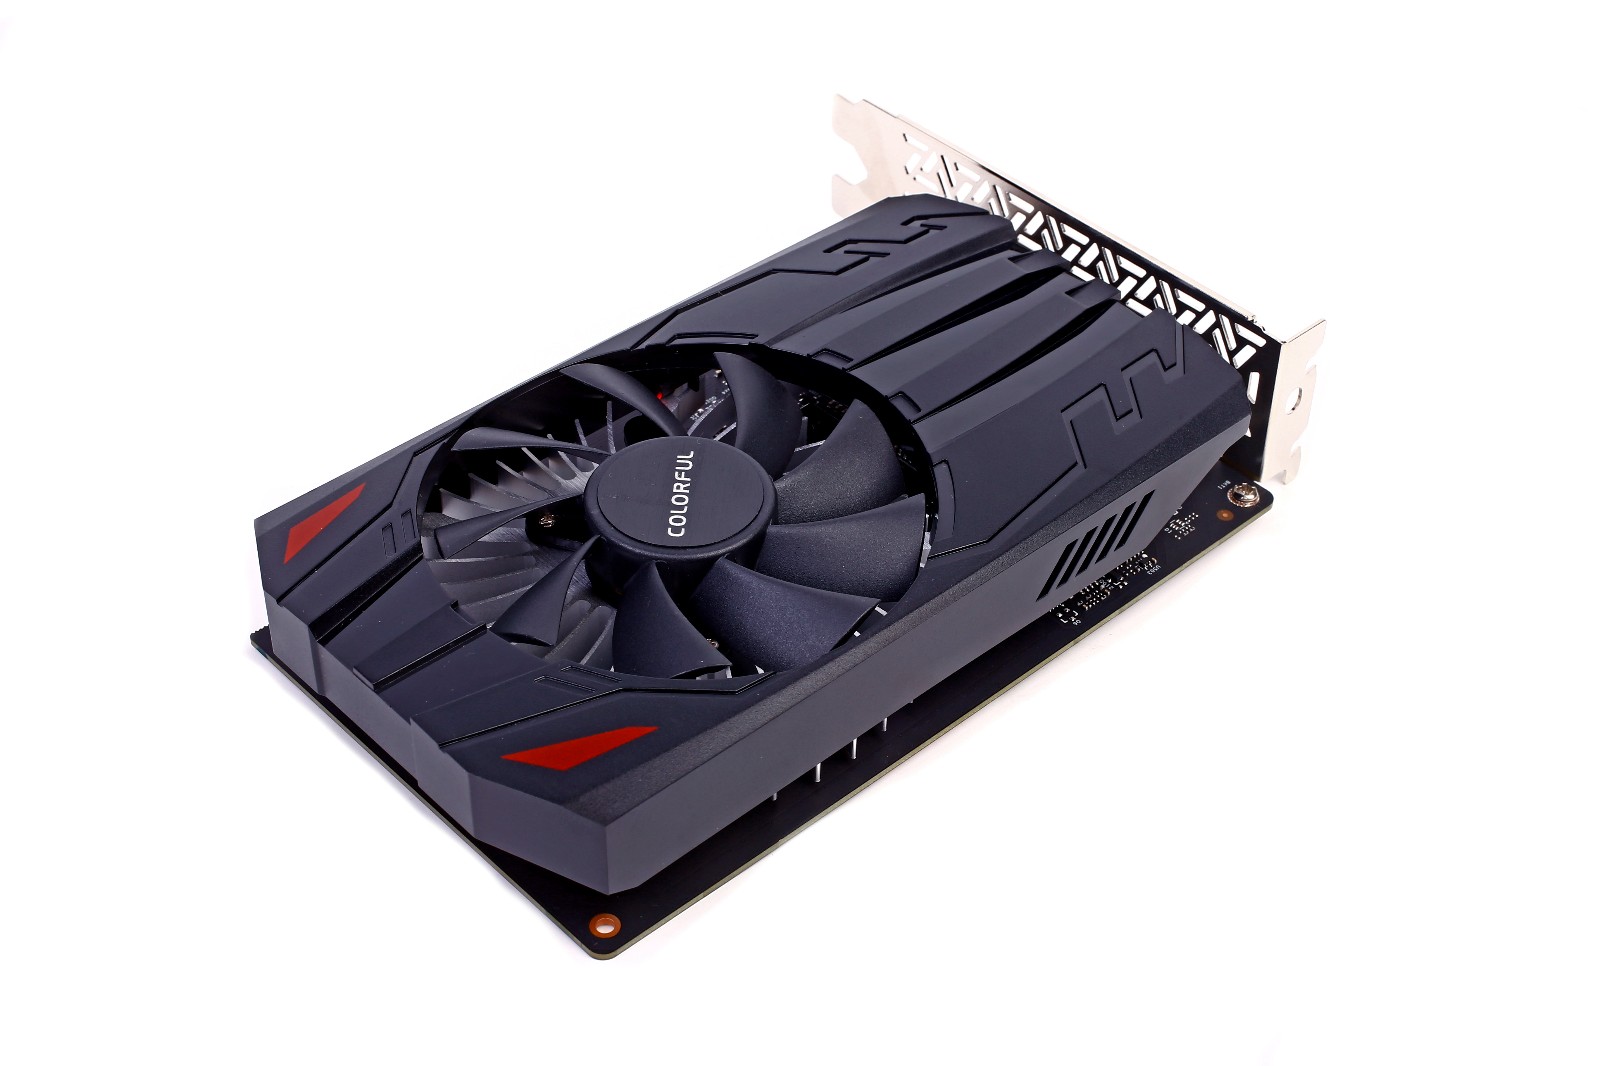 COLORFUL Announces Compact GeForce GT 1030 2G Graphics Card | eTeknix